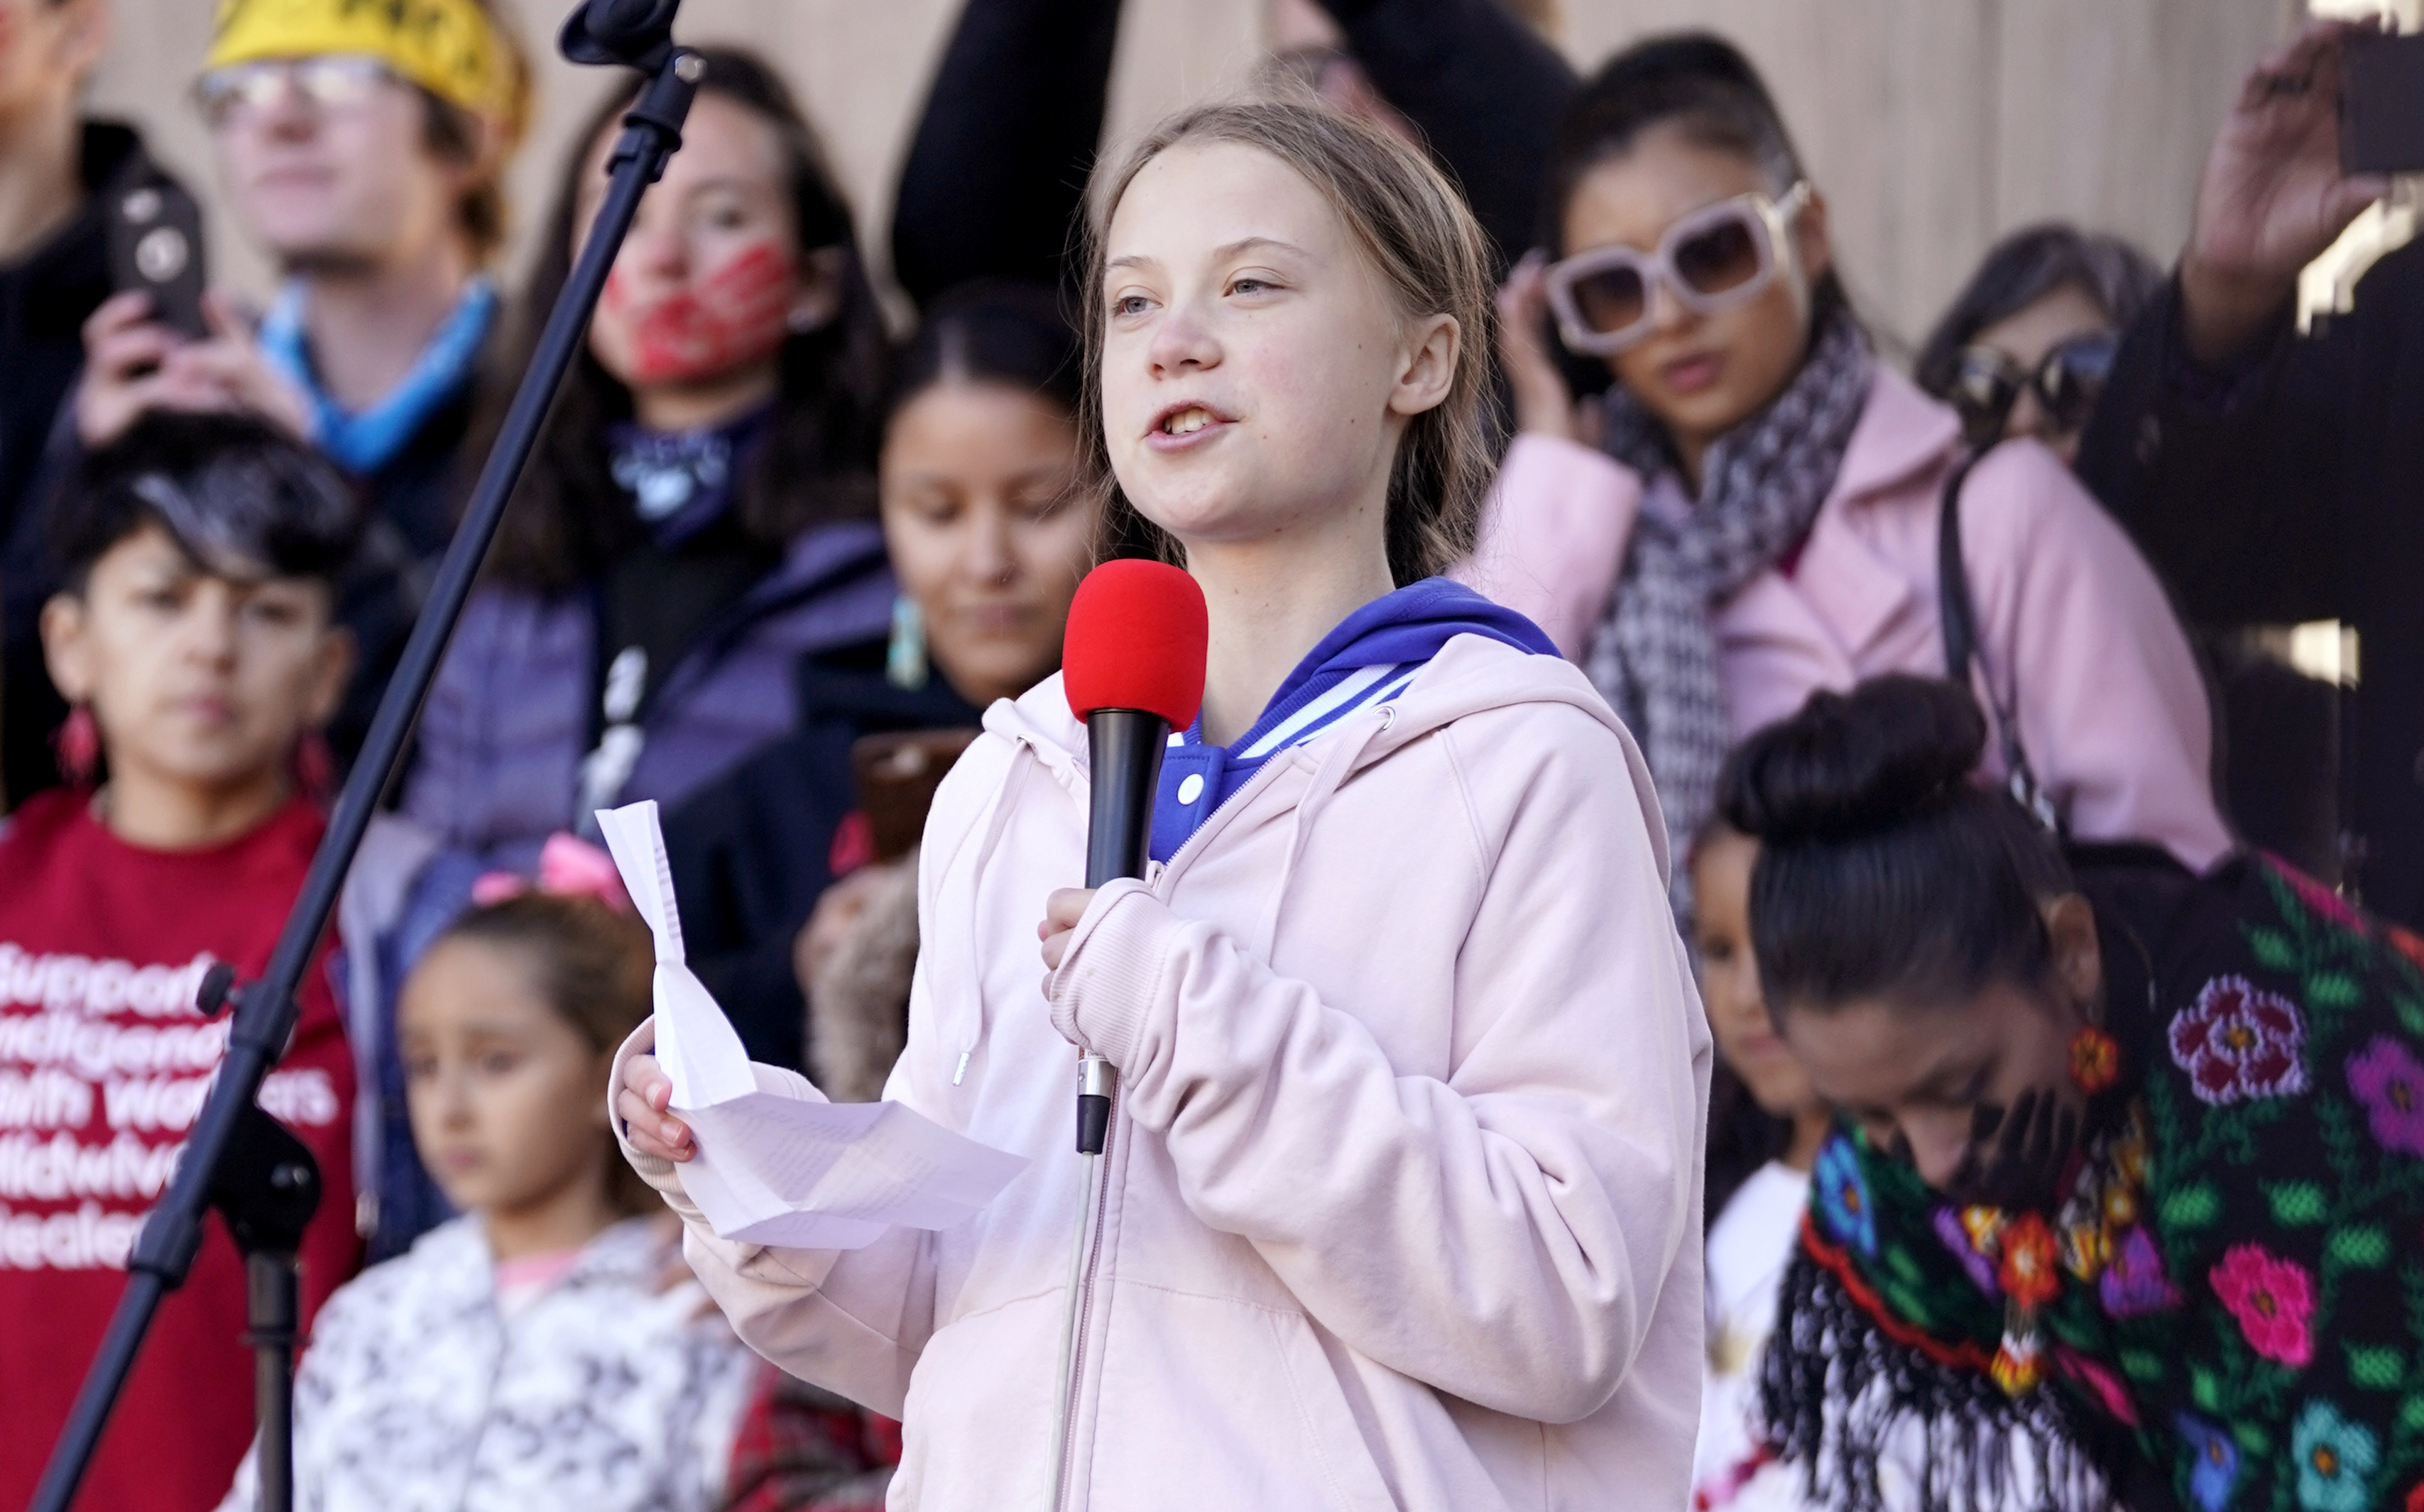 Swedish teen environmental activist Greta Thunberg speaks as people take part in a climate change rally in Denver, Colorado, U.S. October 11, 2019. REUTERS/Rick Wilking